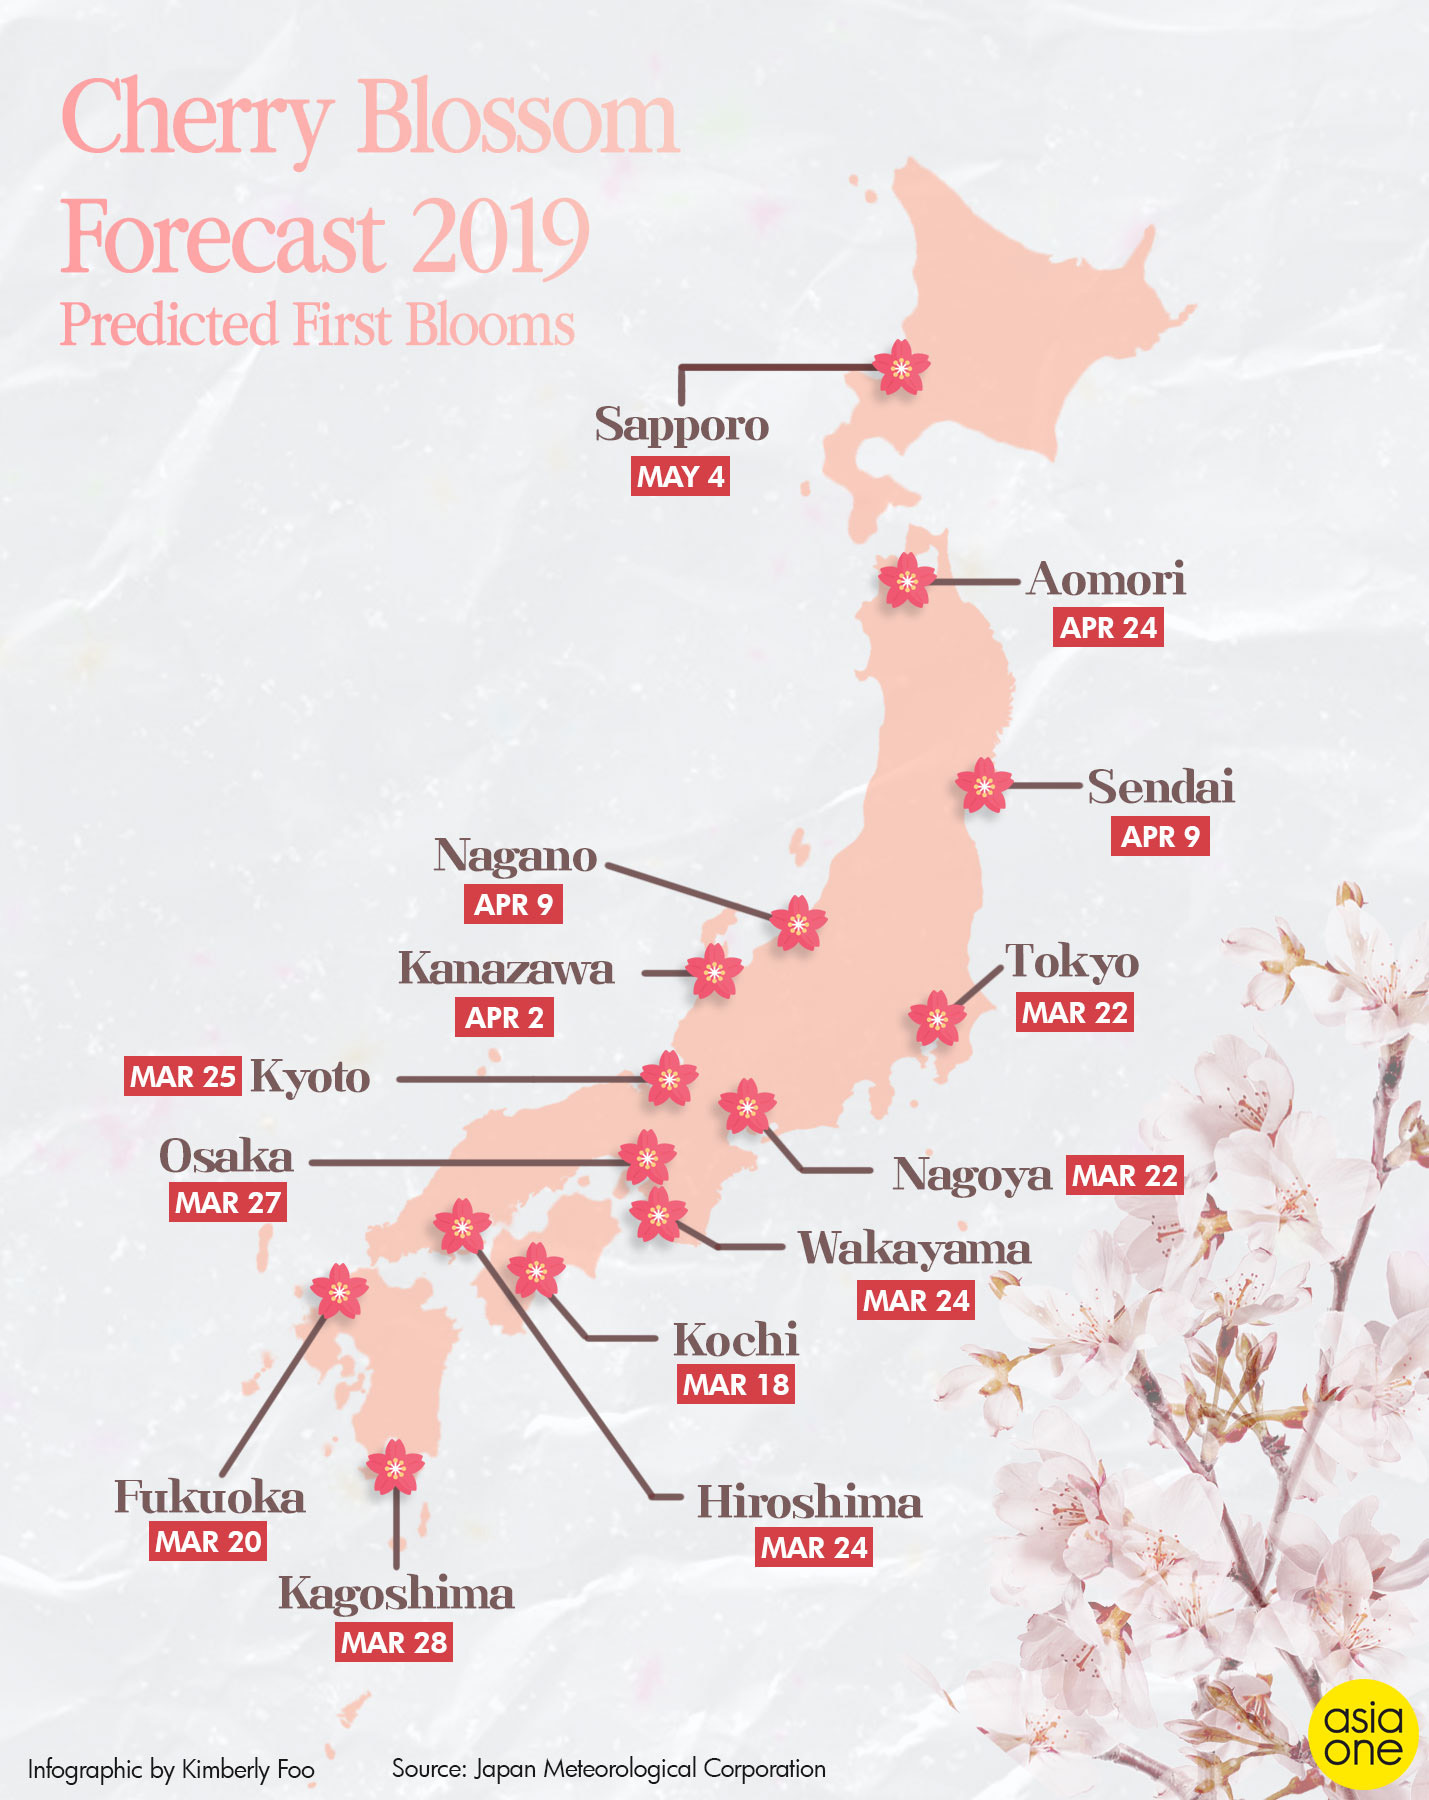 Sakura season in Japan forecast to start earlier this year from mid